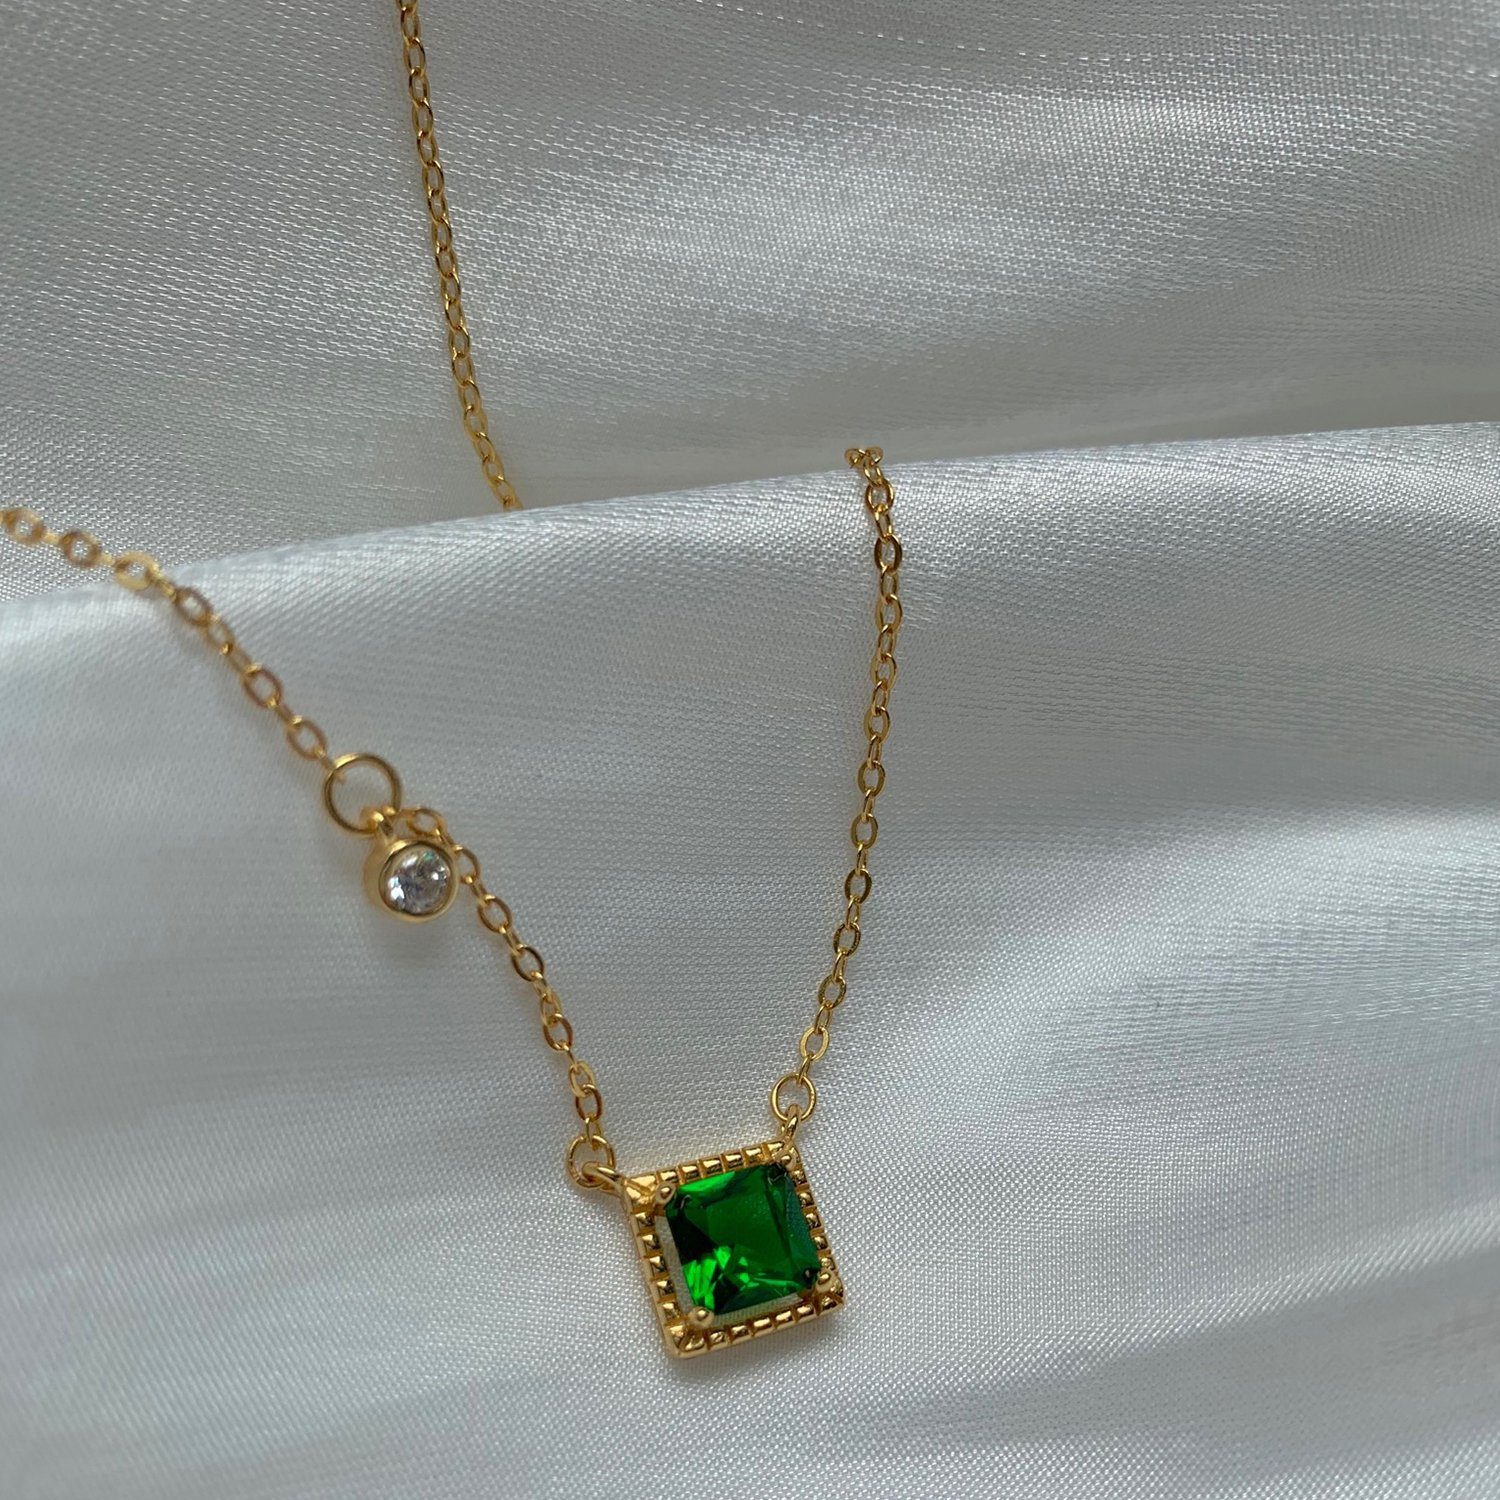 jalleria Charm-Kette Smaragd-Zirkon-Halskette, vergoldet, 18 Zirkon, (1-tlg) weißer Karat Choker